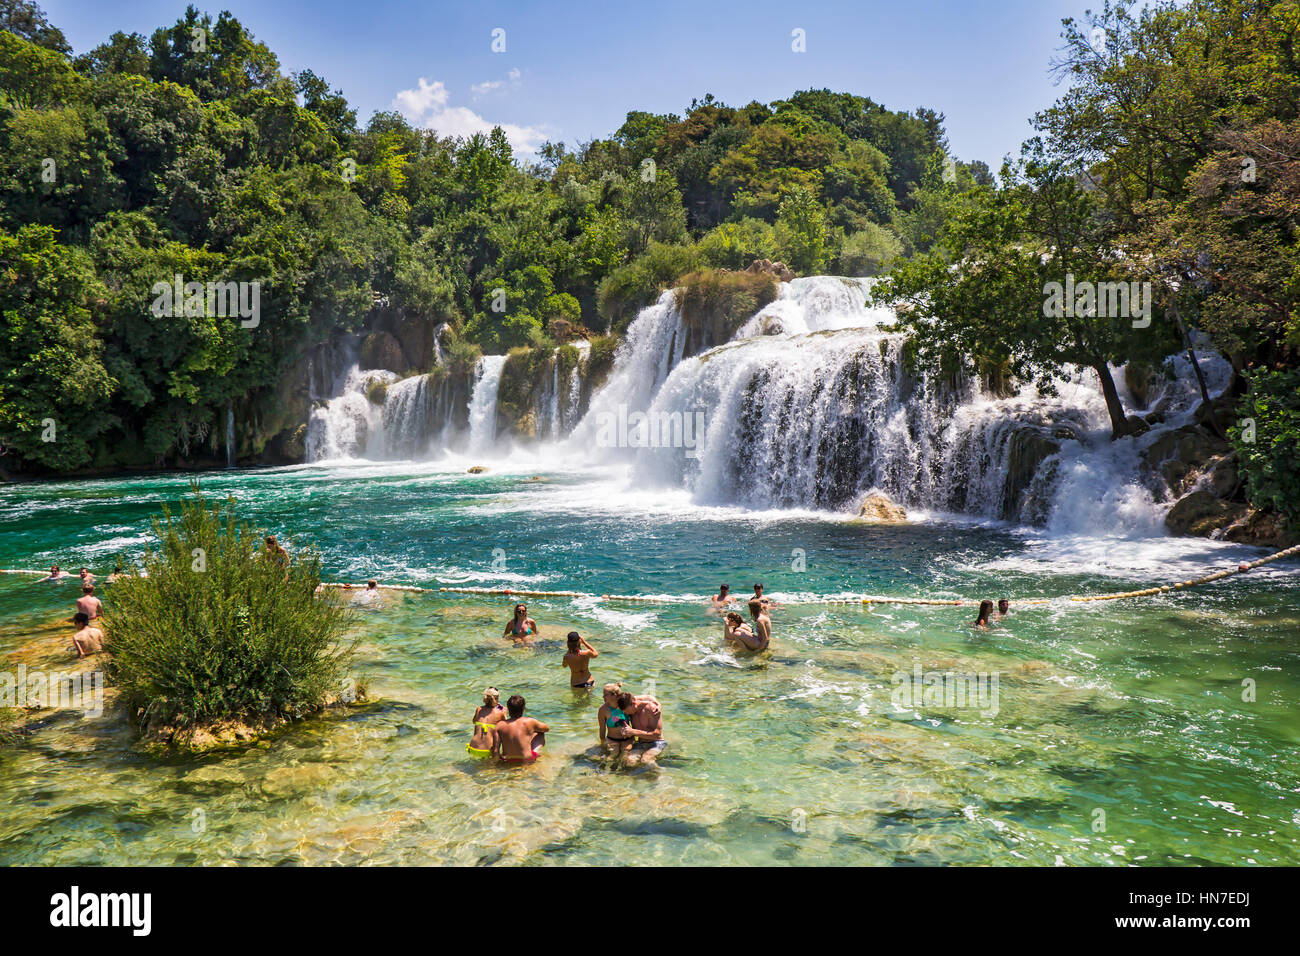 KRKA NATIONAL PARK, CROATIA - JULY 10, 2016: Many tourists  swim  in the Krka River in the Krka National Park in Croatia. This is one of the most famo Stock Photo